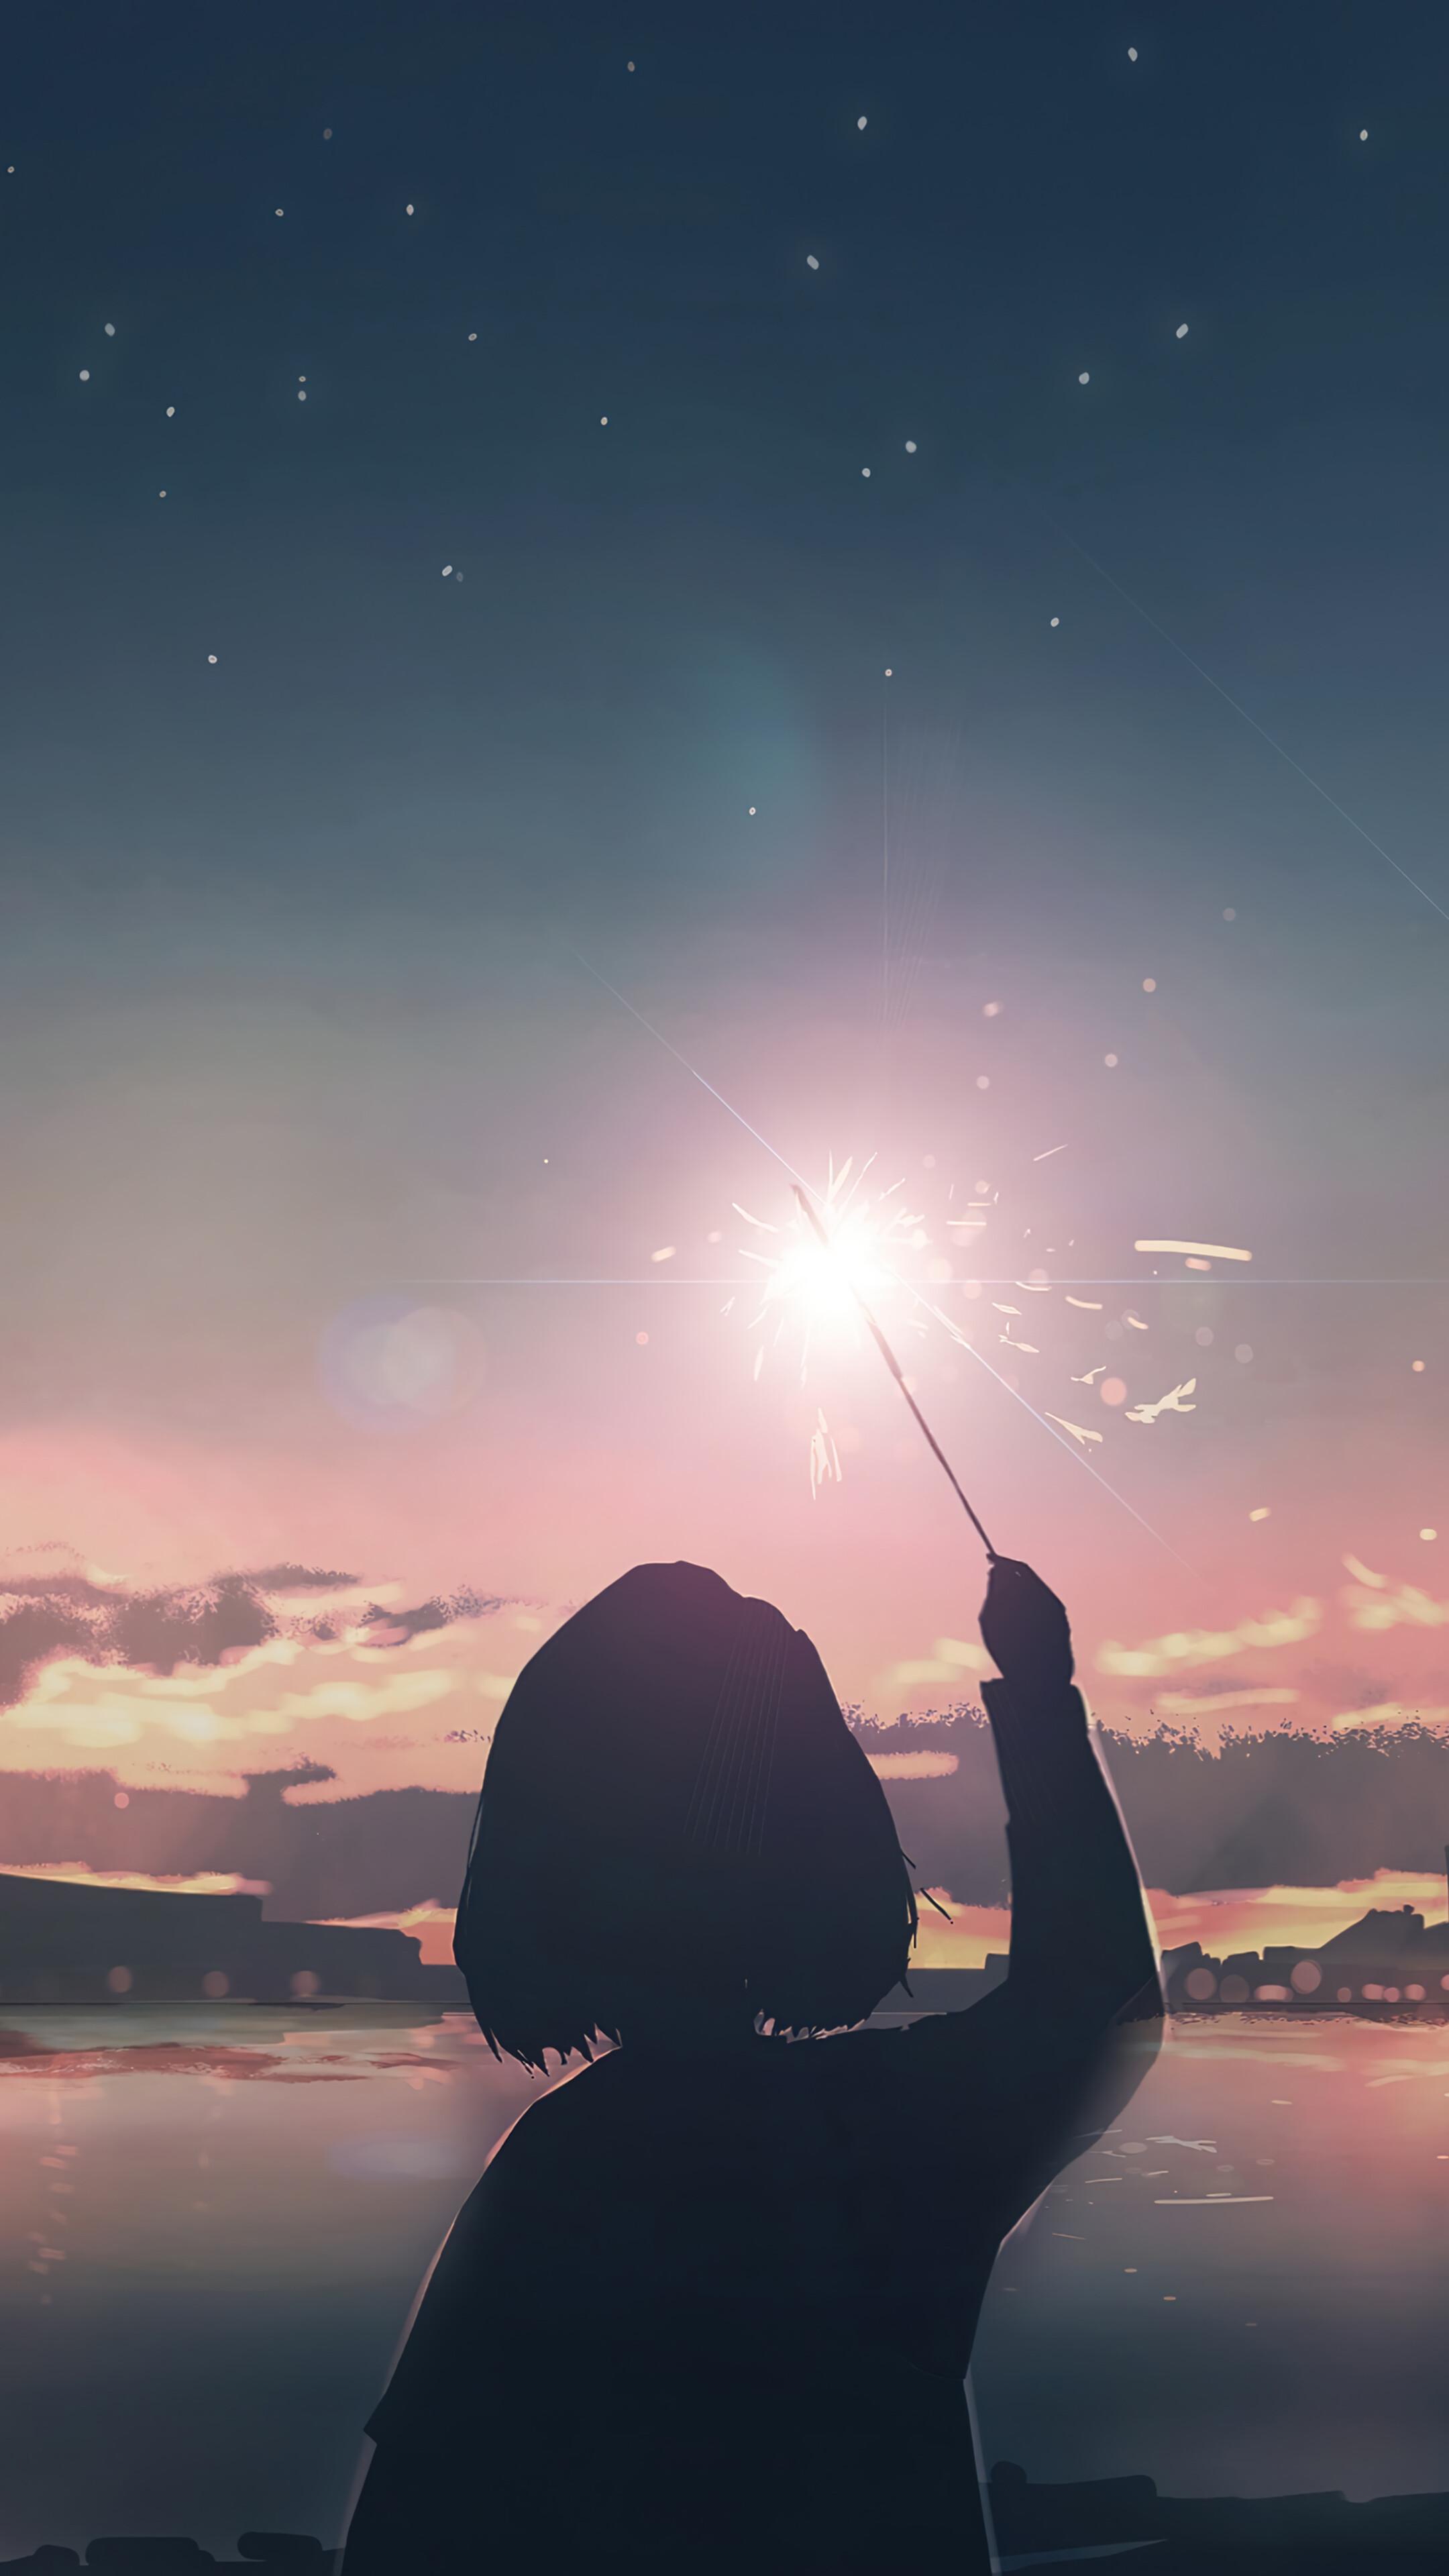 Anime Girl Silhouette Sunset Scenery 4k Wallpaper iPhone HD